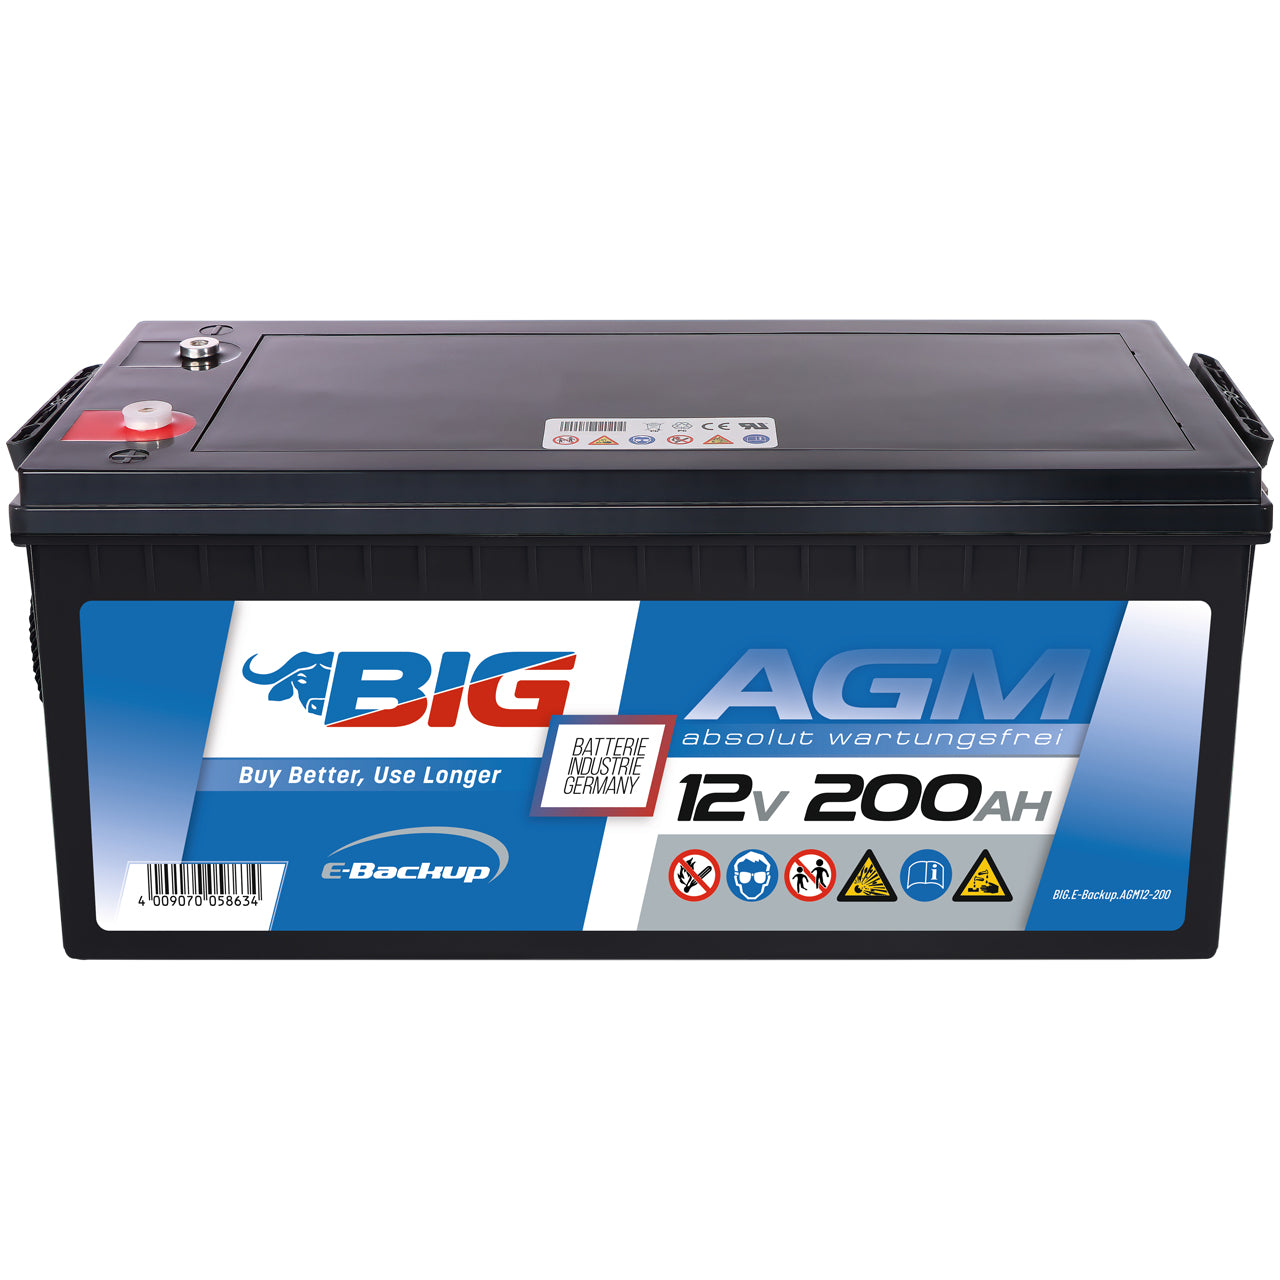 BIG E-Backup AGM 12V 200Ah